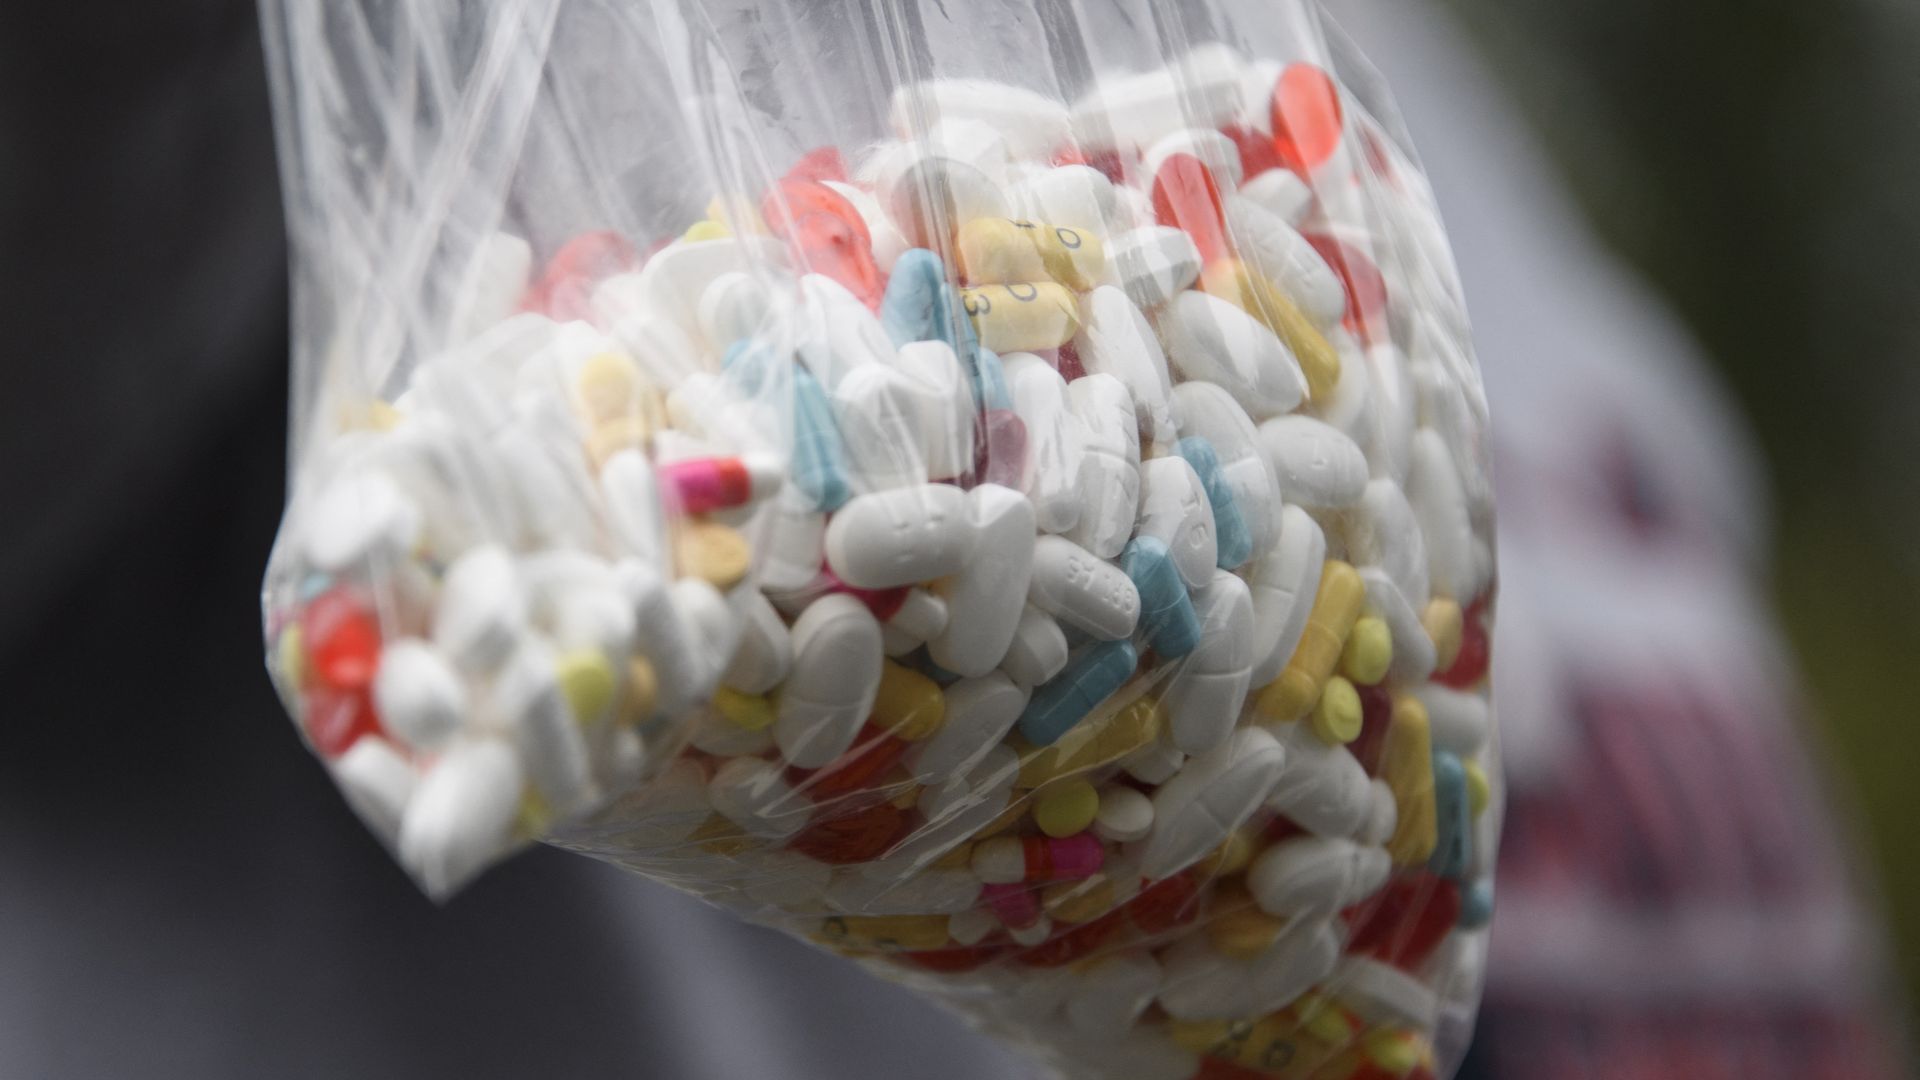 DEA warns of fake pills flooding streets